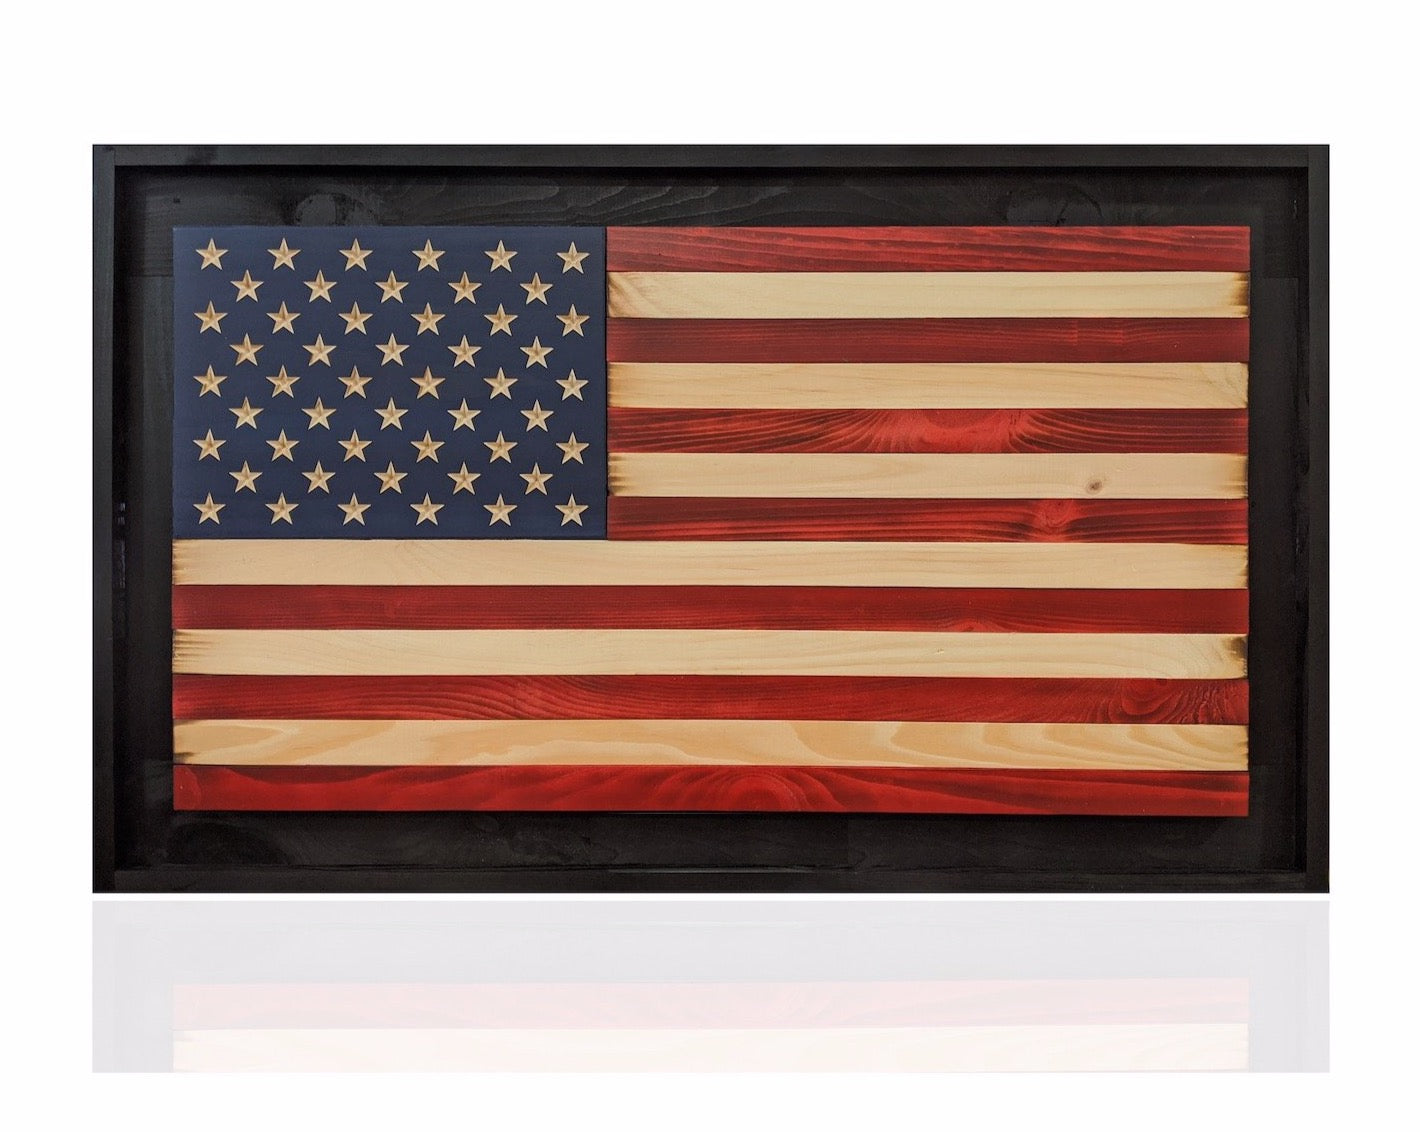 Framed wood american flag made by veteran